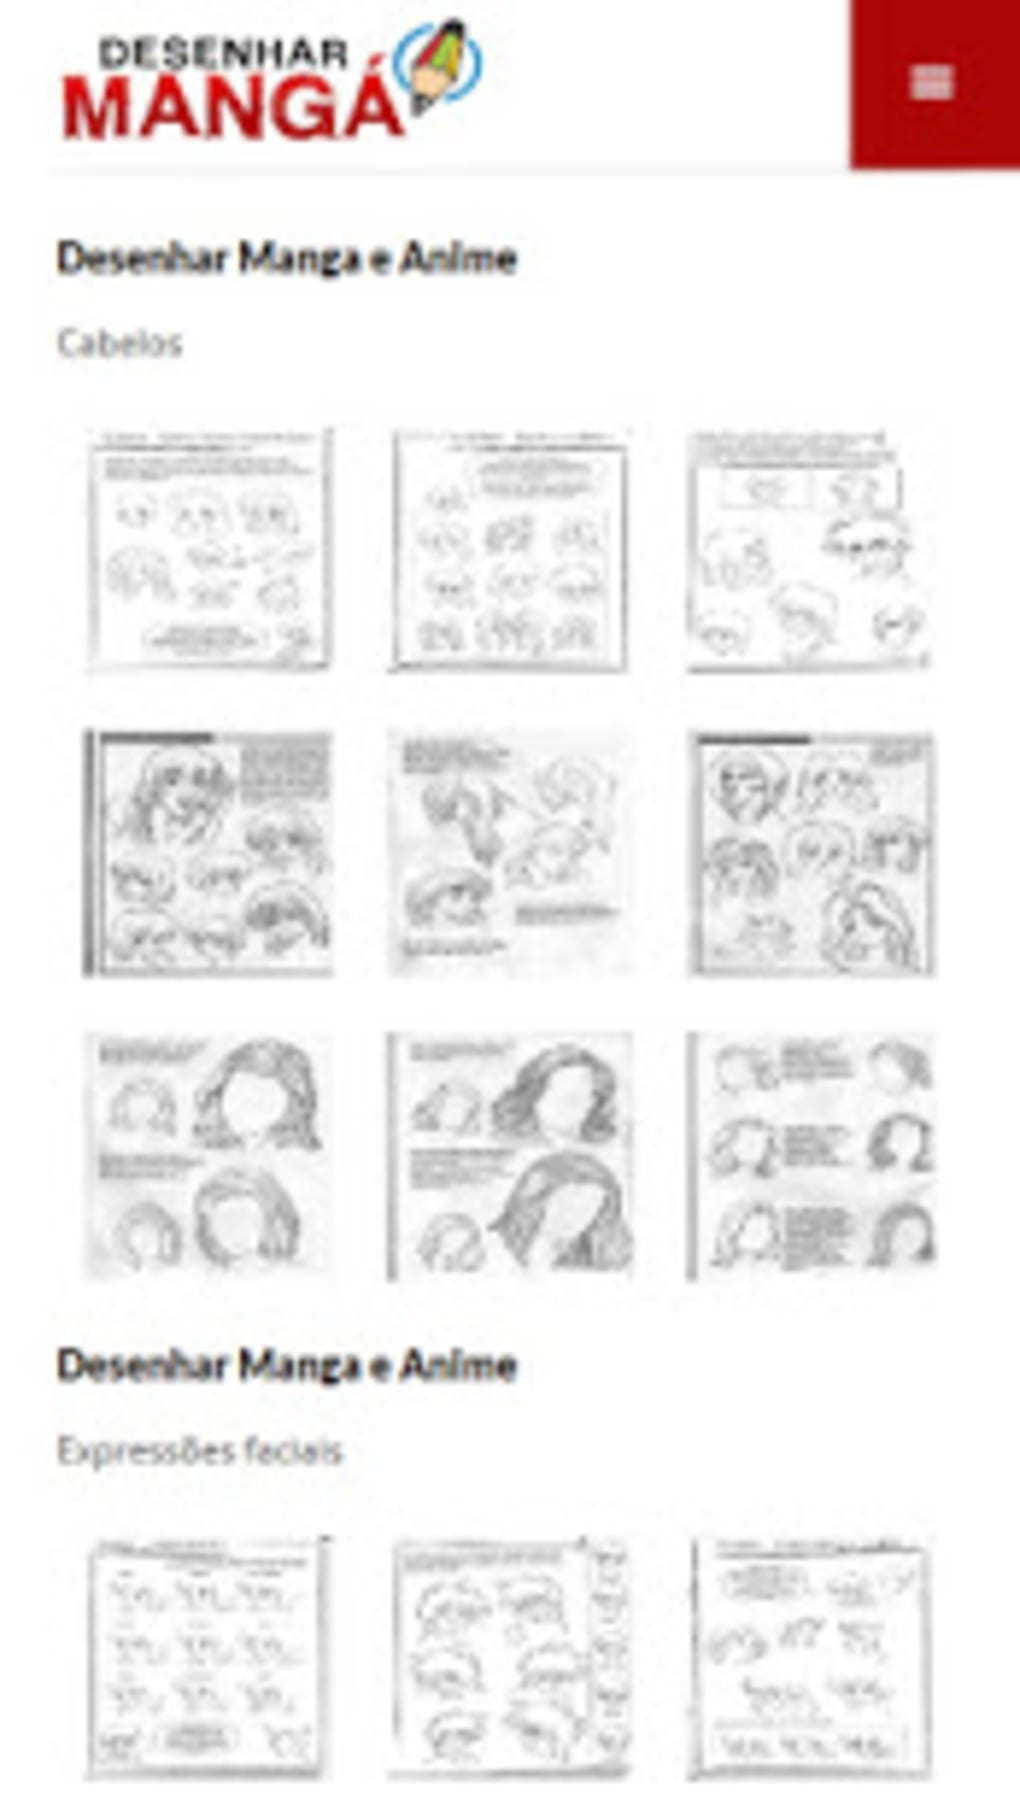 Animes Vision - Assistir Animes Online Grátis HD, PDF, Entretenimento